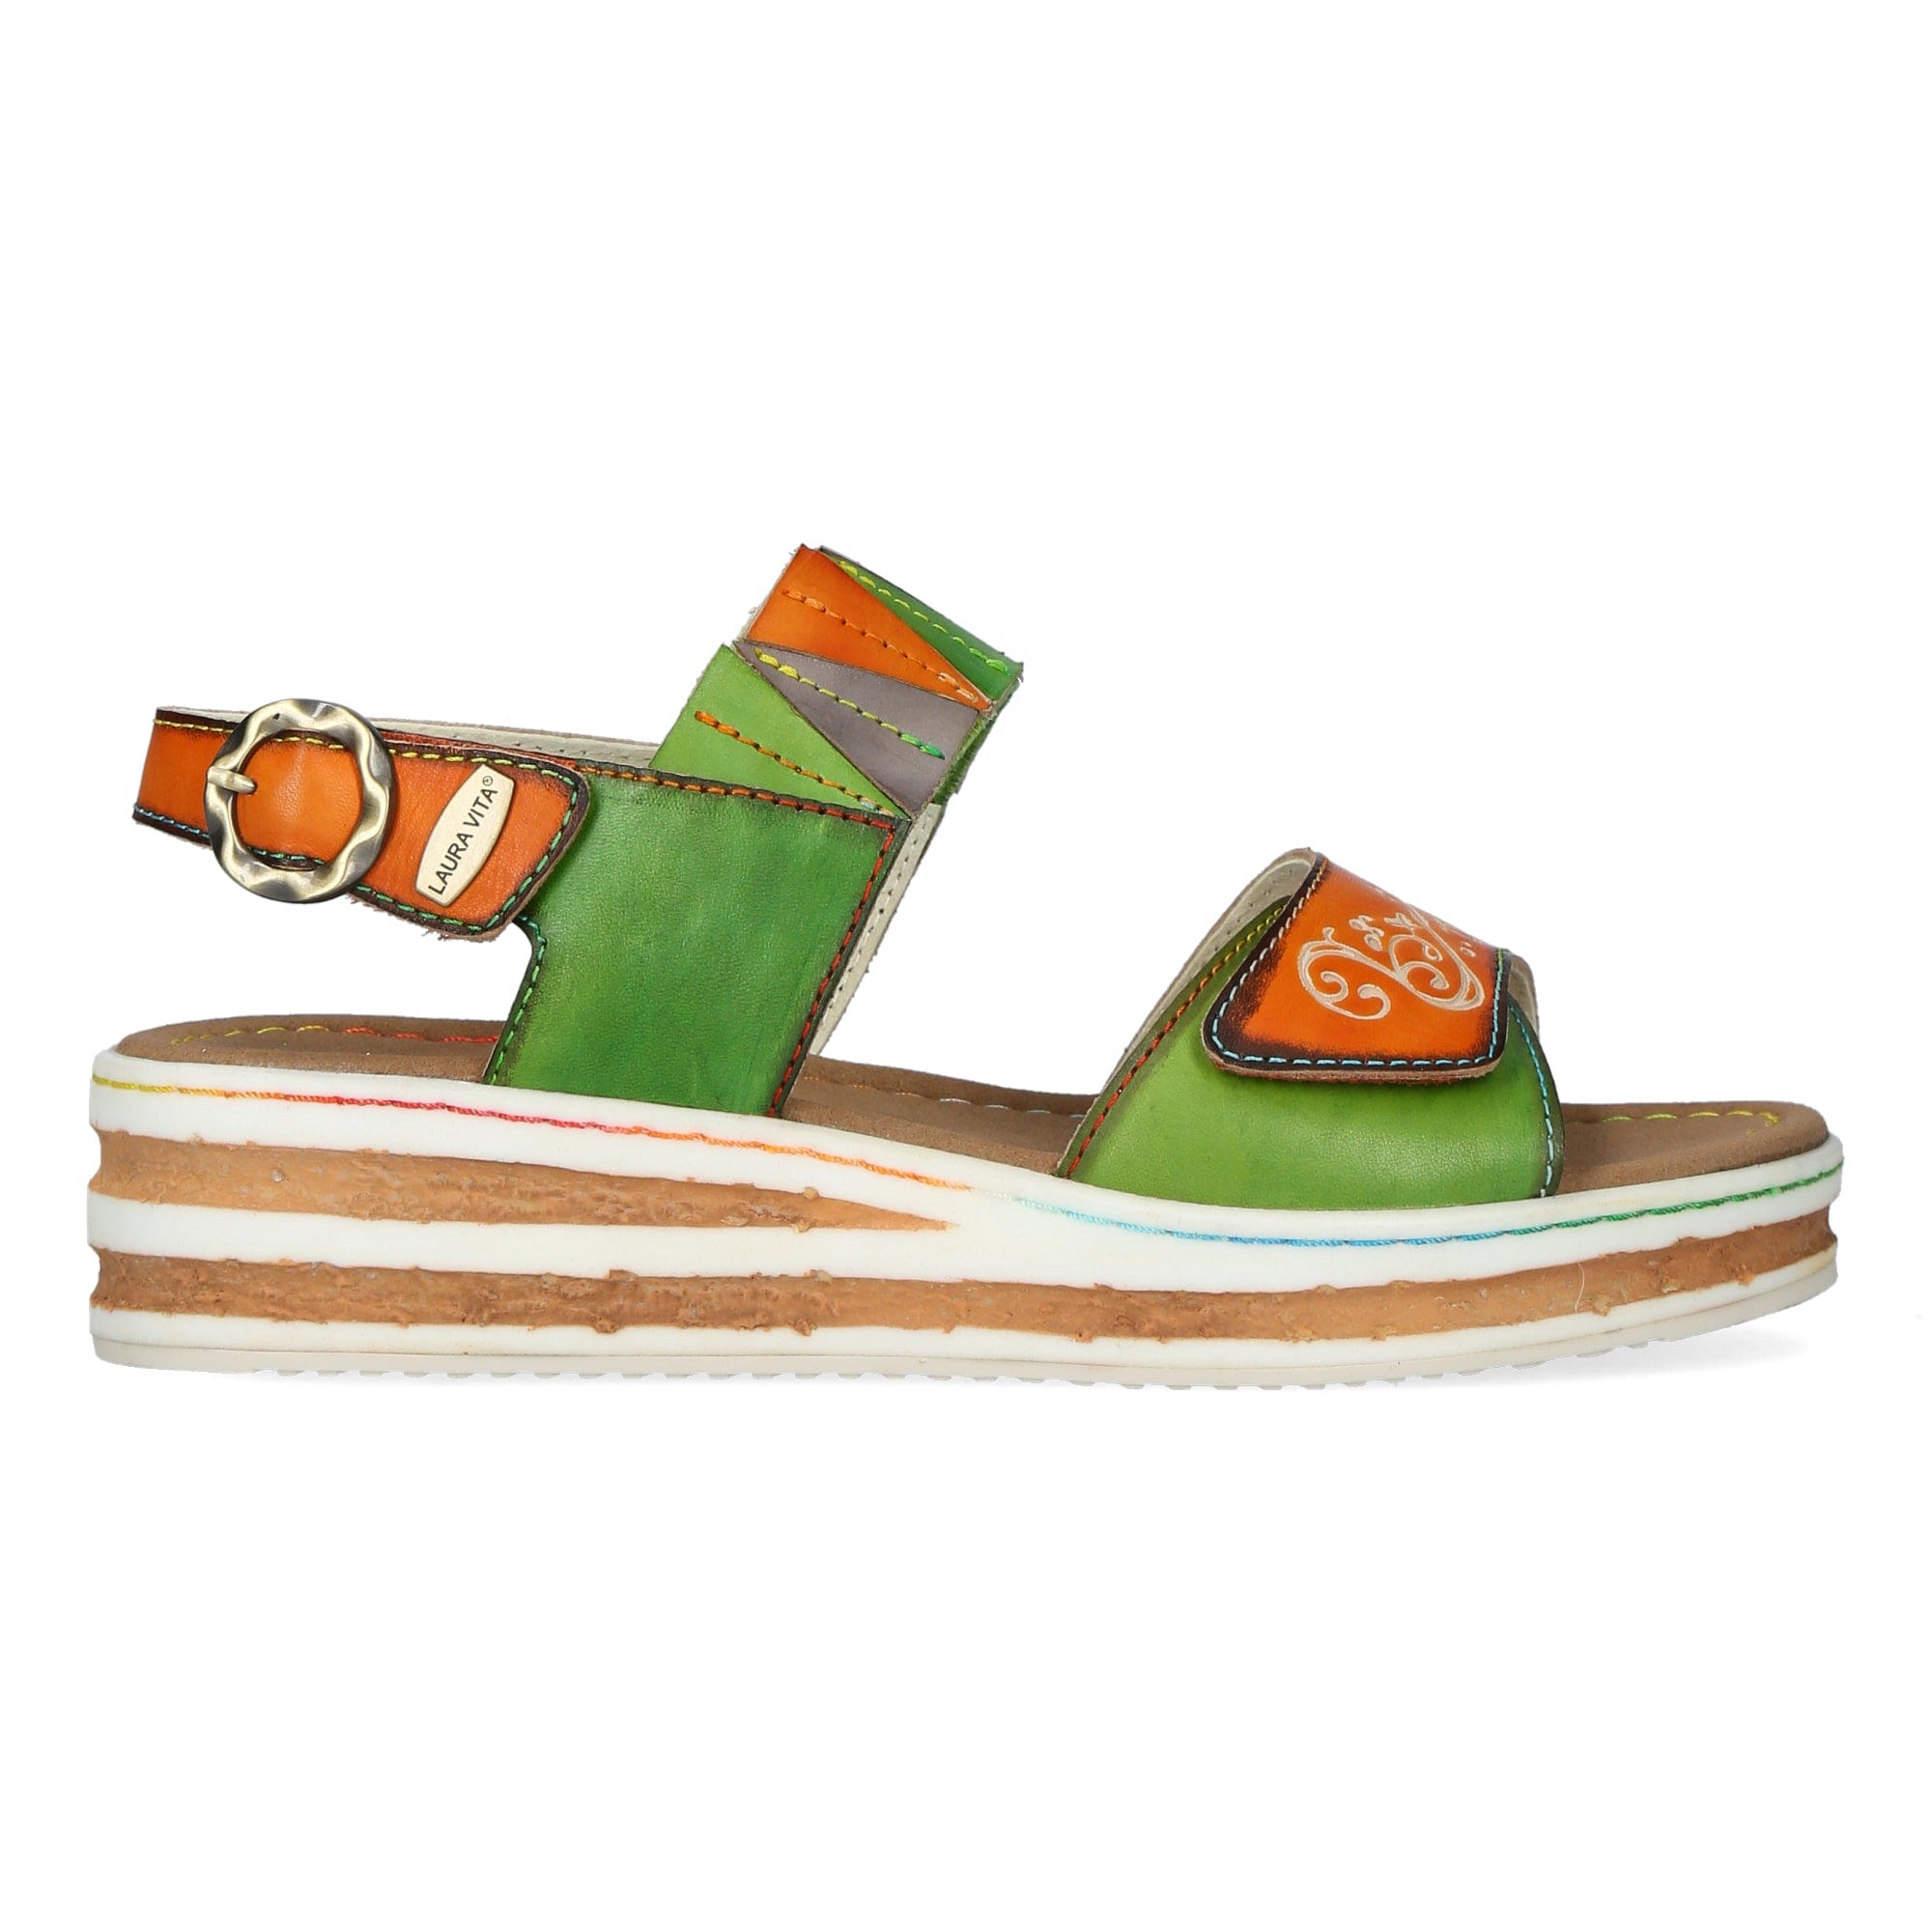 Shoe DICEZEO 05 - 35 / Green - Sandal